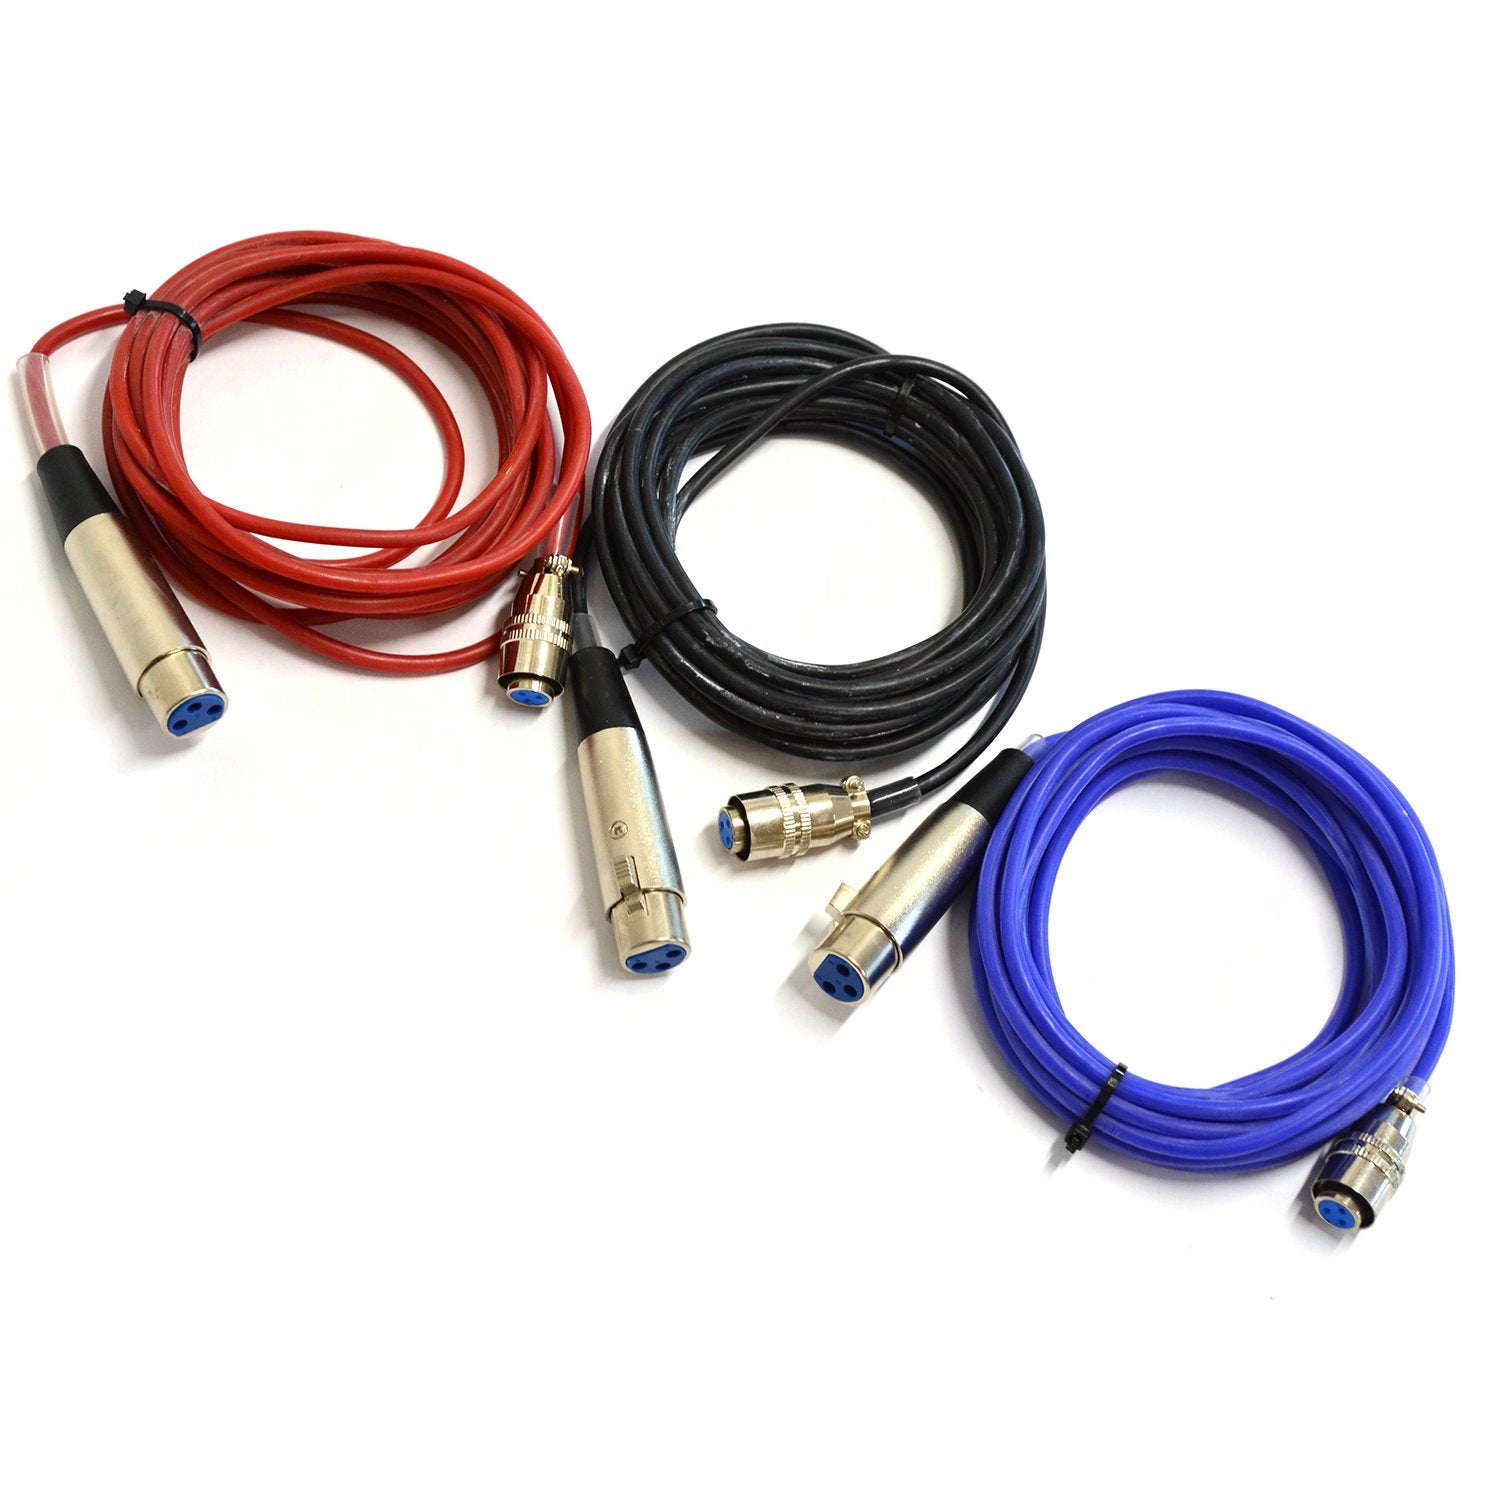 RTD sensor Cable, XLR to QD, Silicon Cable 3m Blue